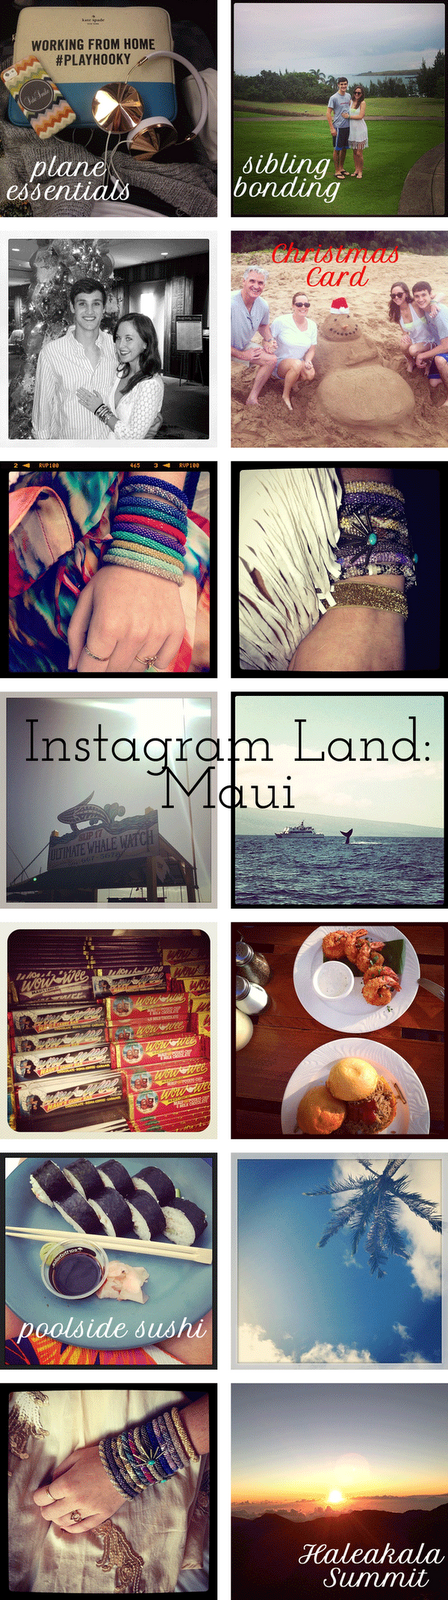 Instagram Land: Maui